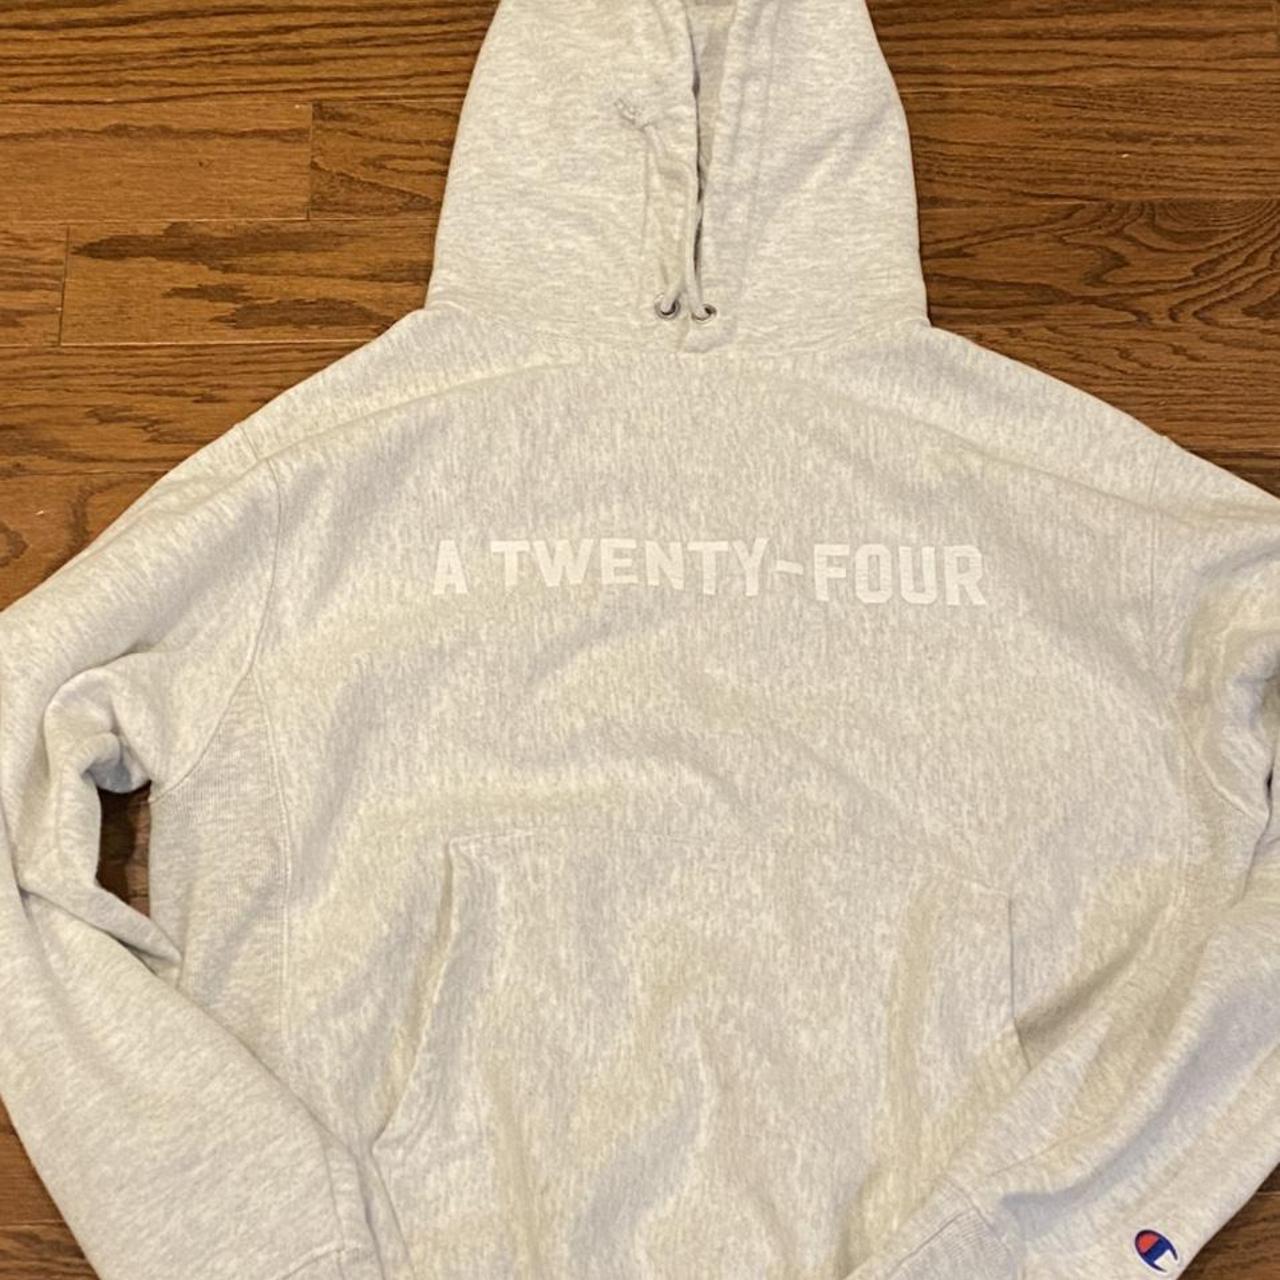 Product Image 1 - A24 Champion sweatshirt

Hasn’t been worn